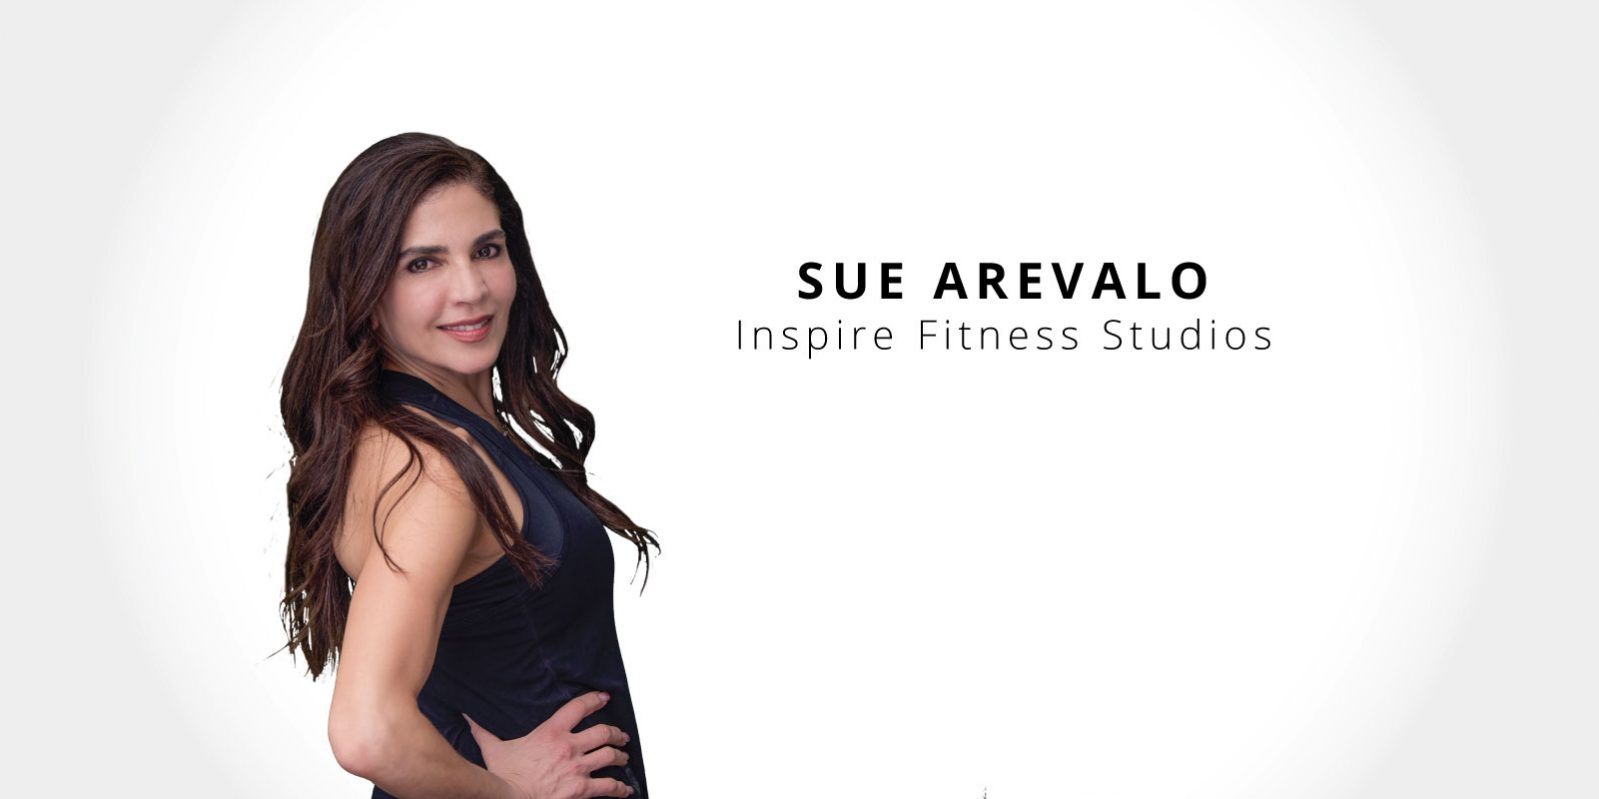 INSPIRE FITNESS STUDIOS TRAINER: Sue Arevalo